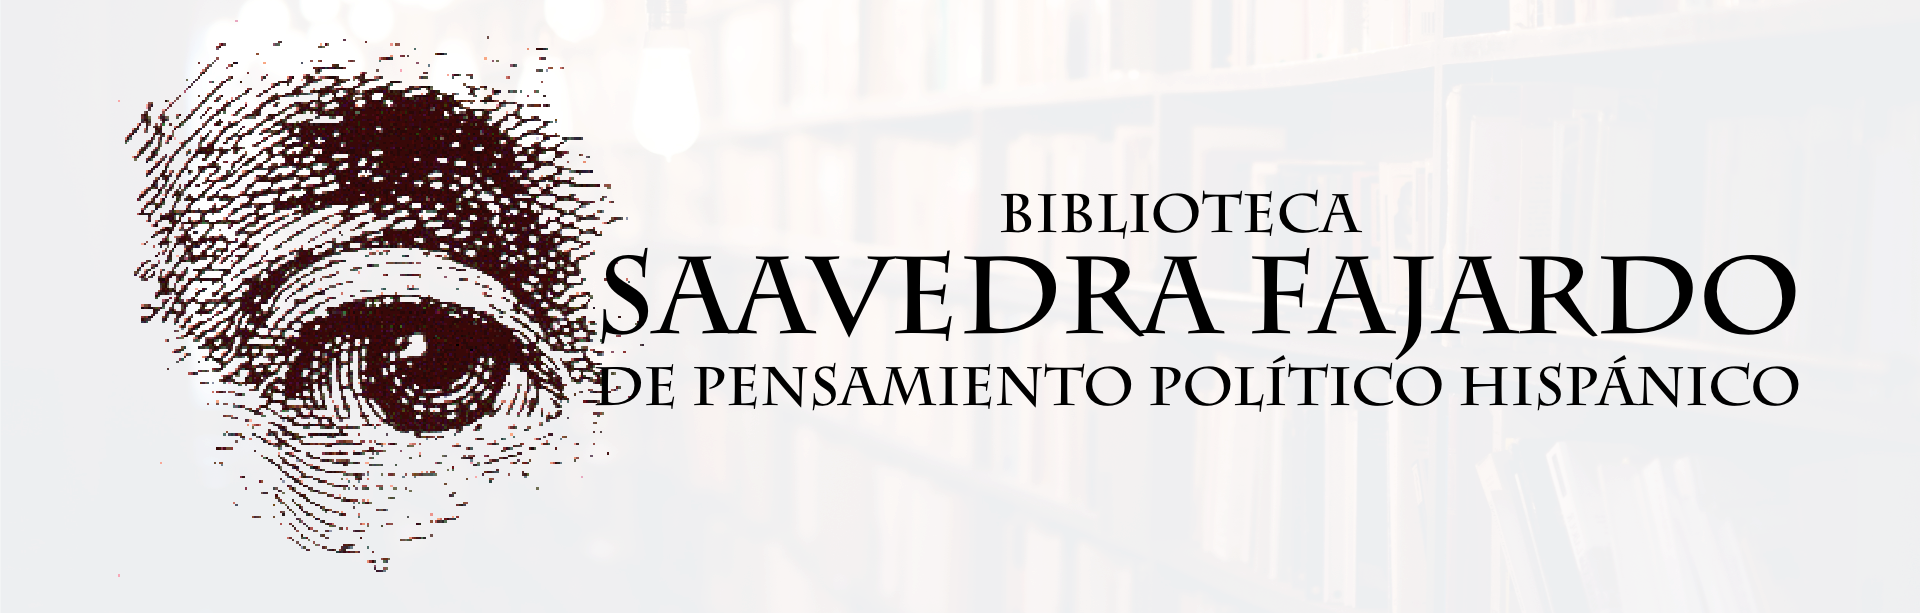 Biblioteca Saavedra Fajardo